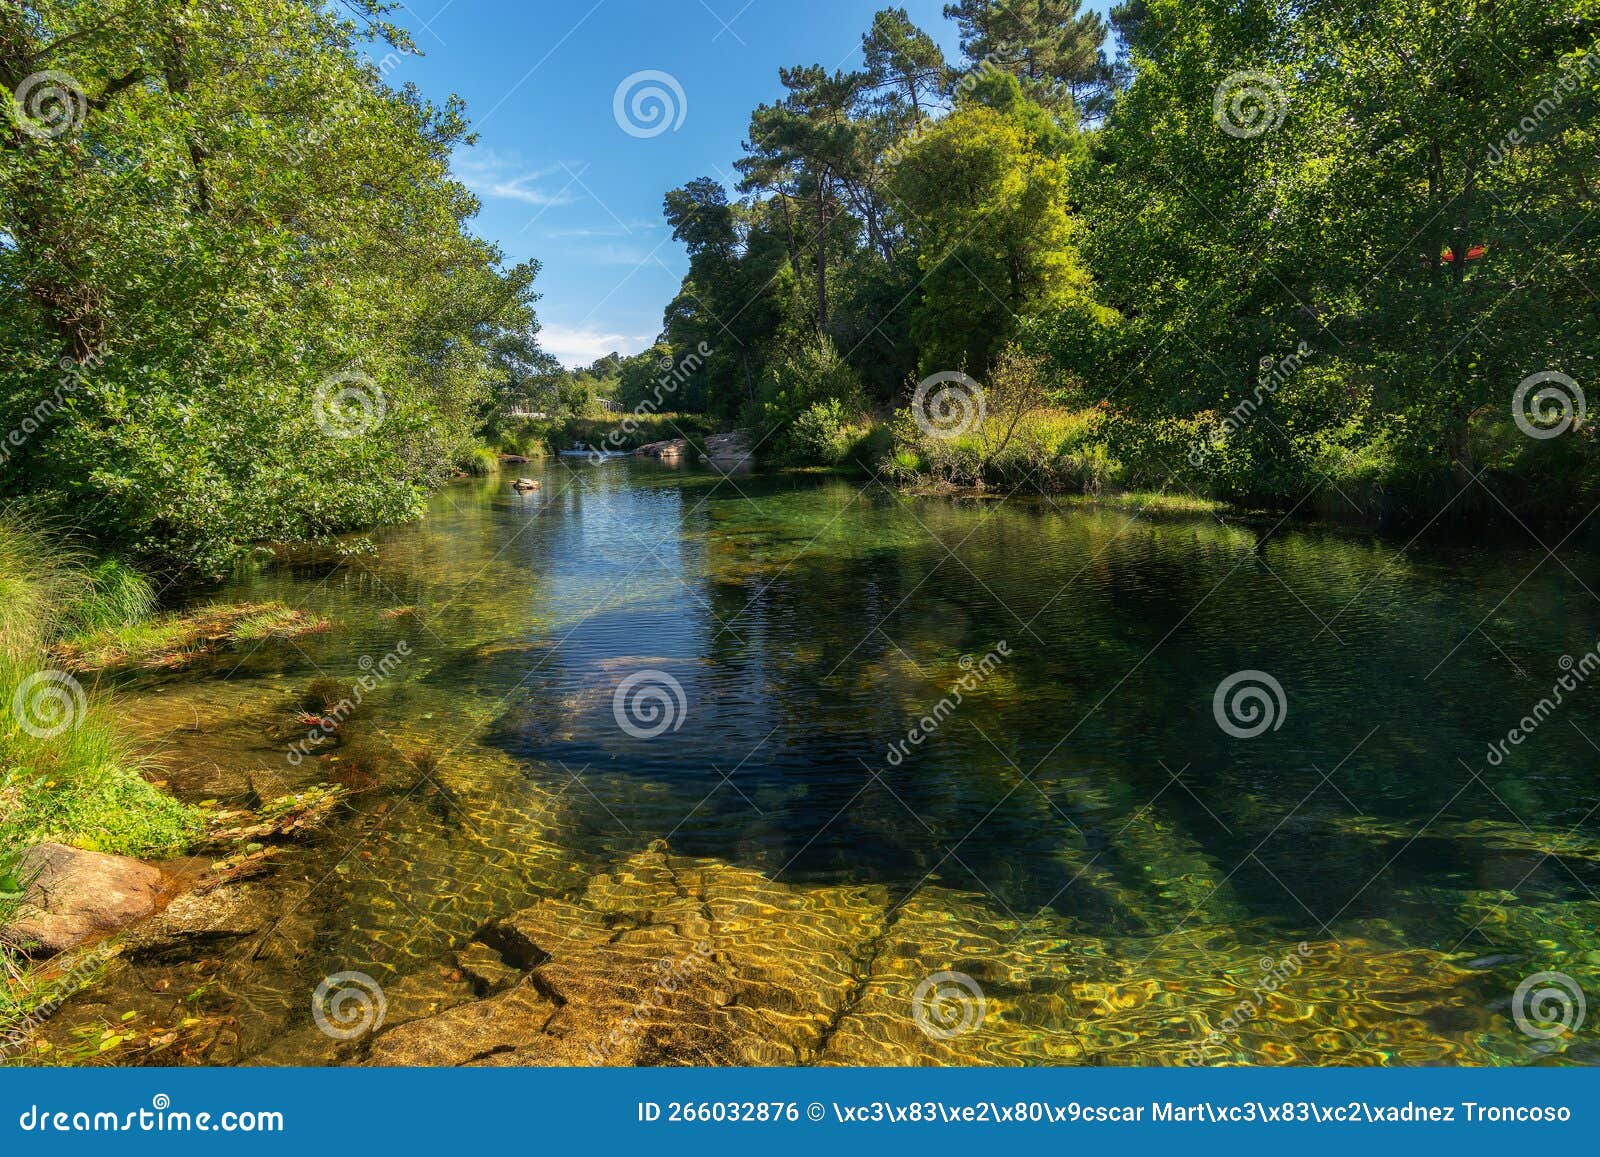 natural river pool in a area named in o rosal, pontevedra